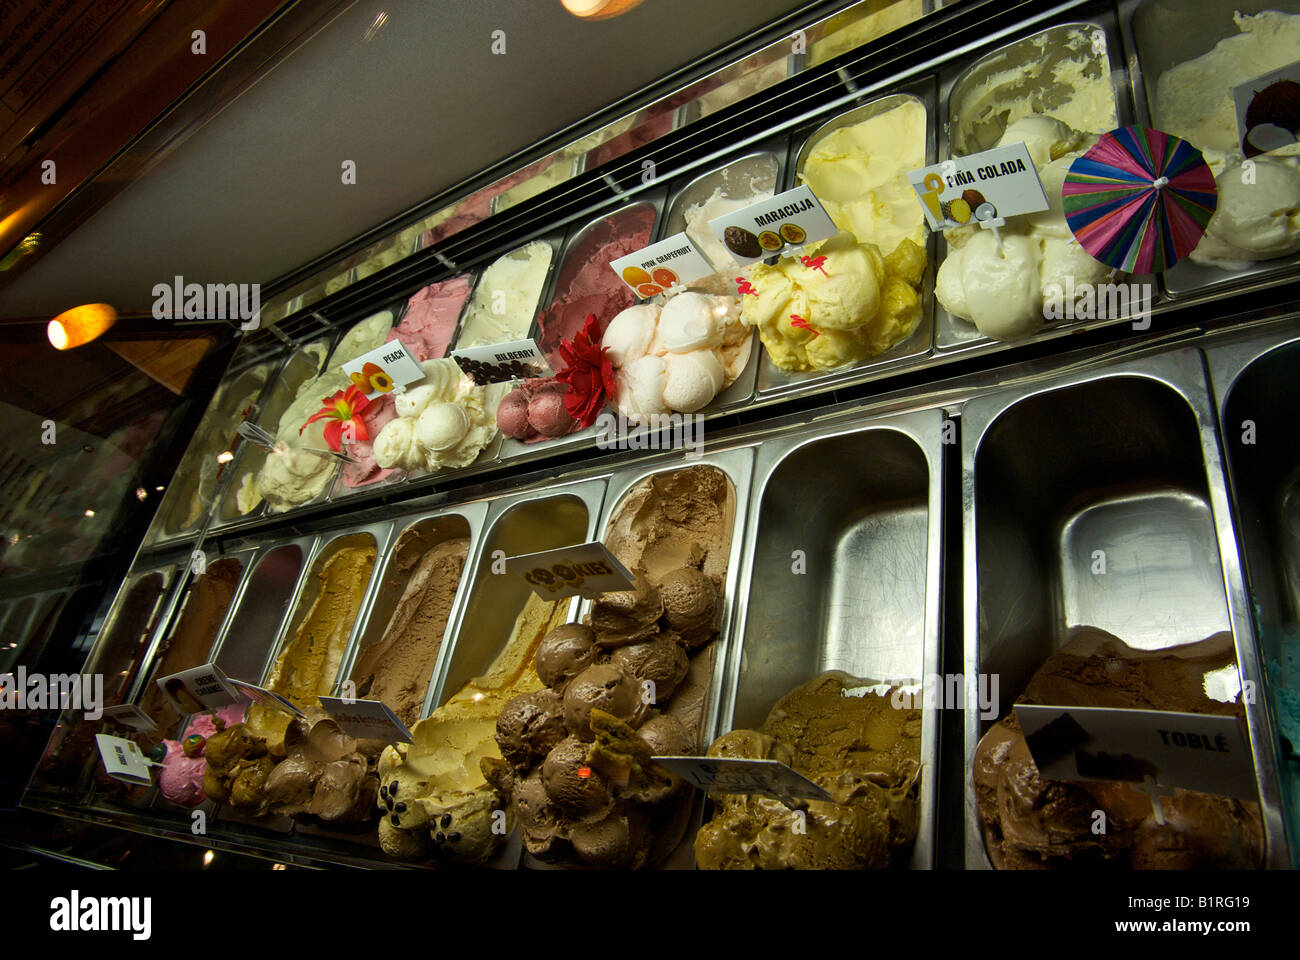 https://c8.alamy.com/comp/B1RG19/scoops-of-gourmet-ice-cream-in-a-freezer-display-case-B1RG19.jpg